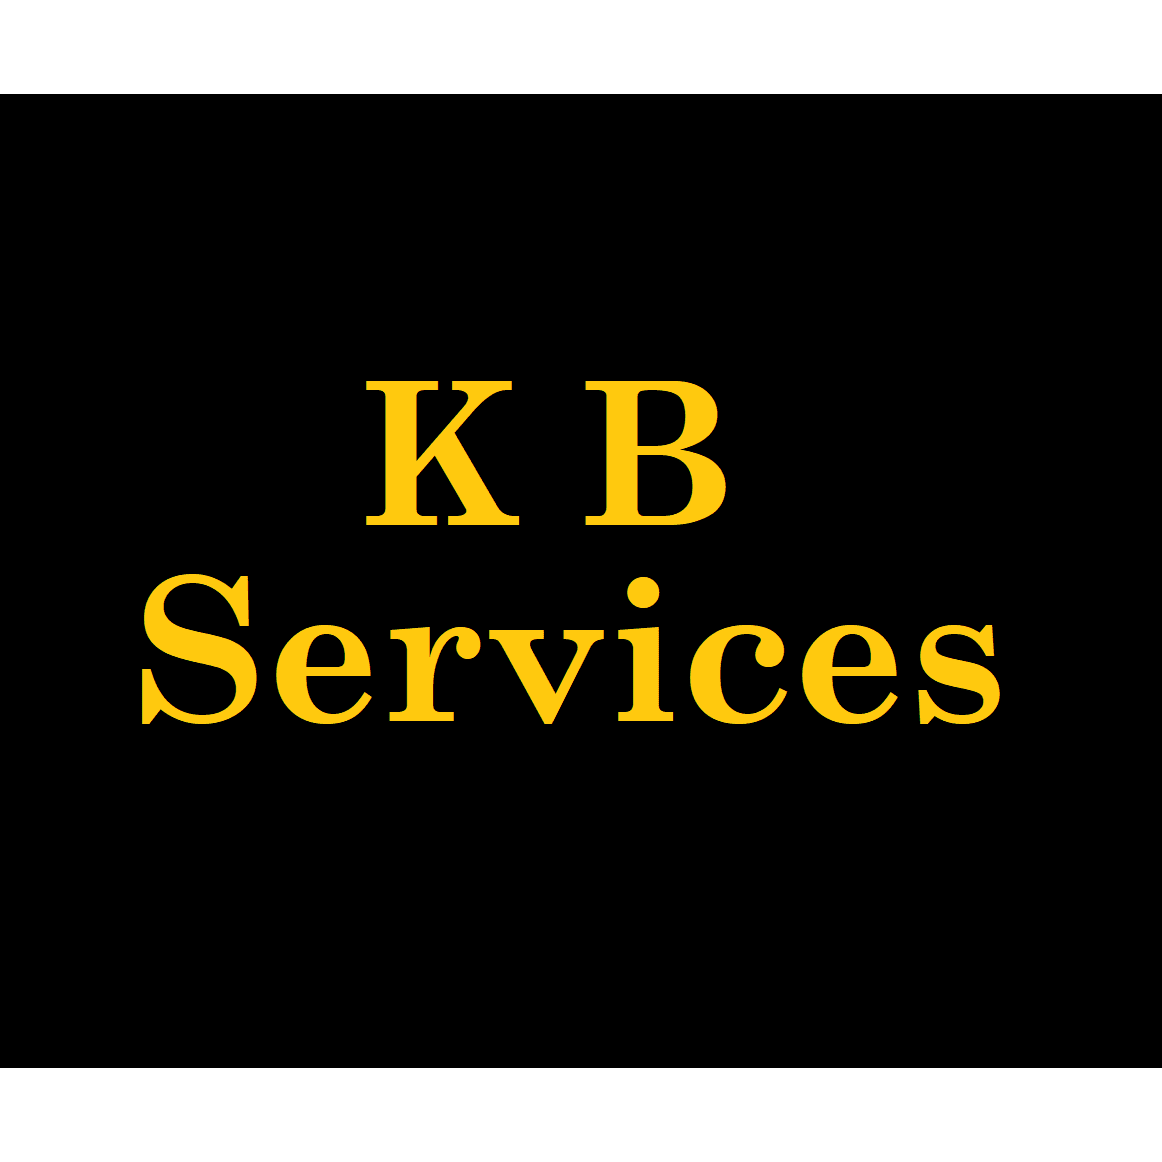 K B Services - St. Helens, Merseyside WA11 7PG - 07864 818051 | ShowMeLocal.com